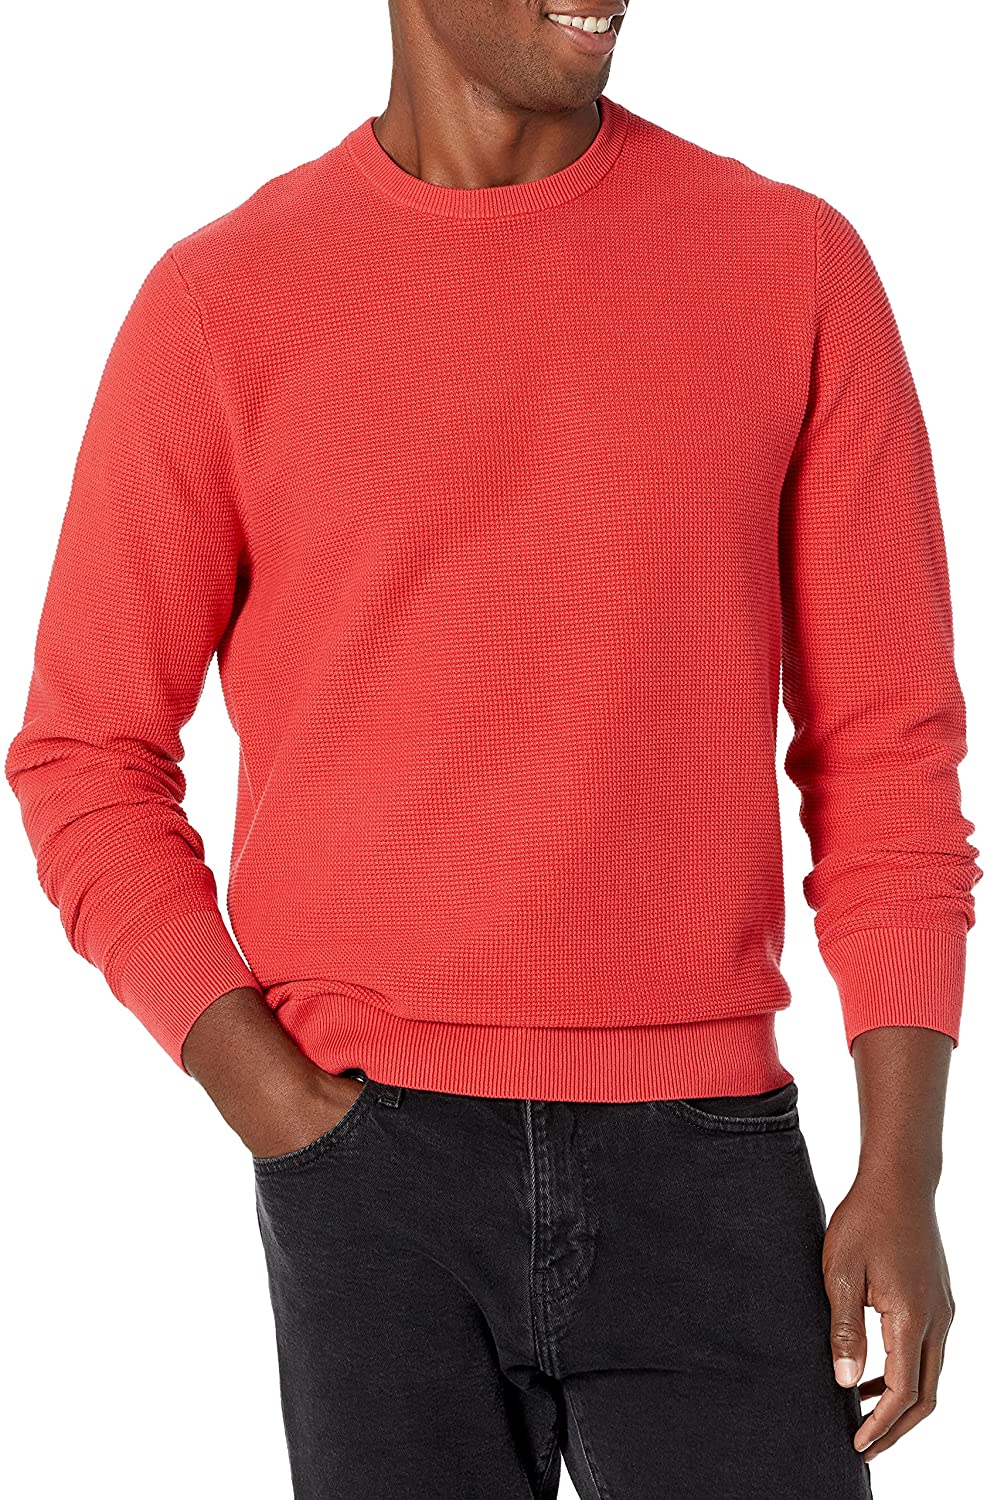 Goodthreads Men's Soft Cotton Thermal Stitch Crewneck Sweater 